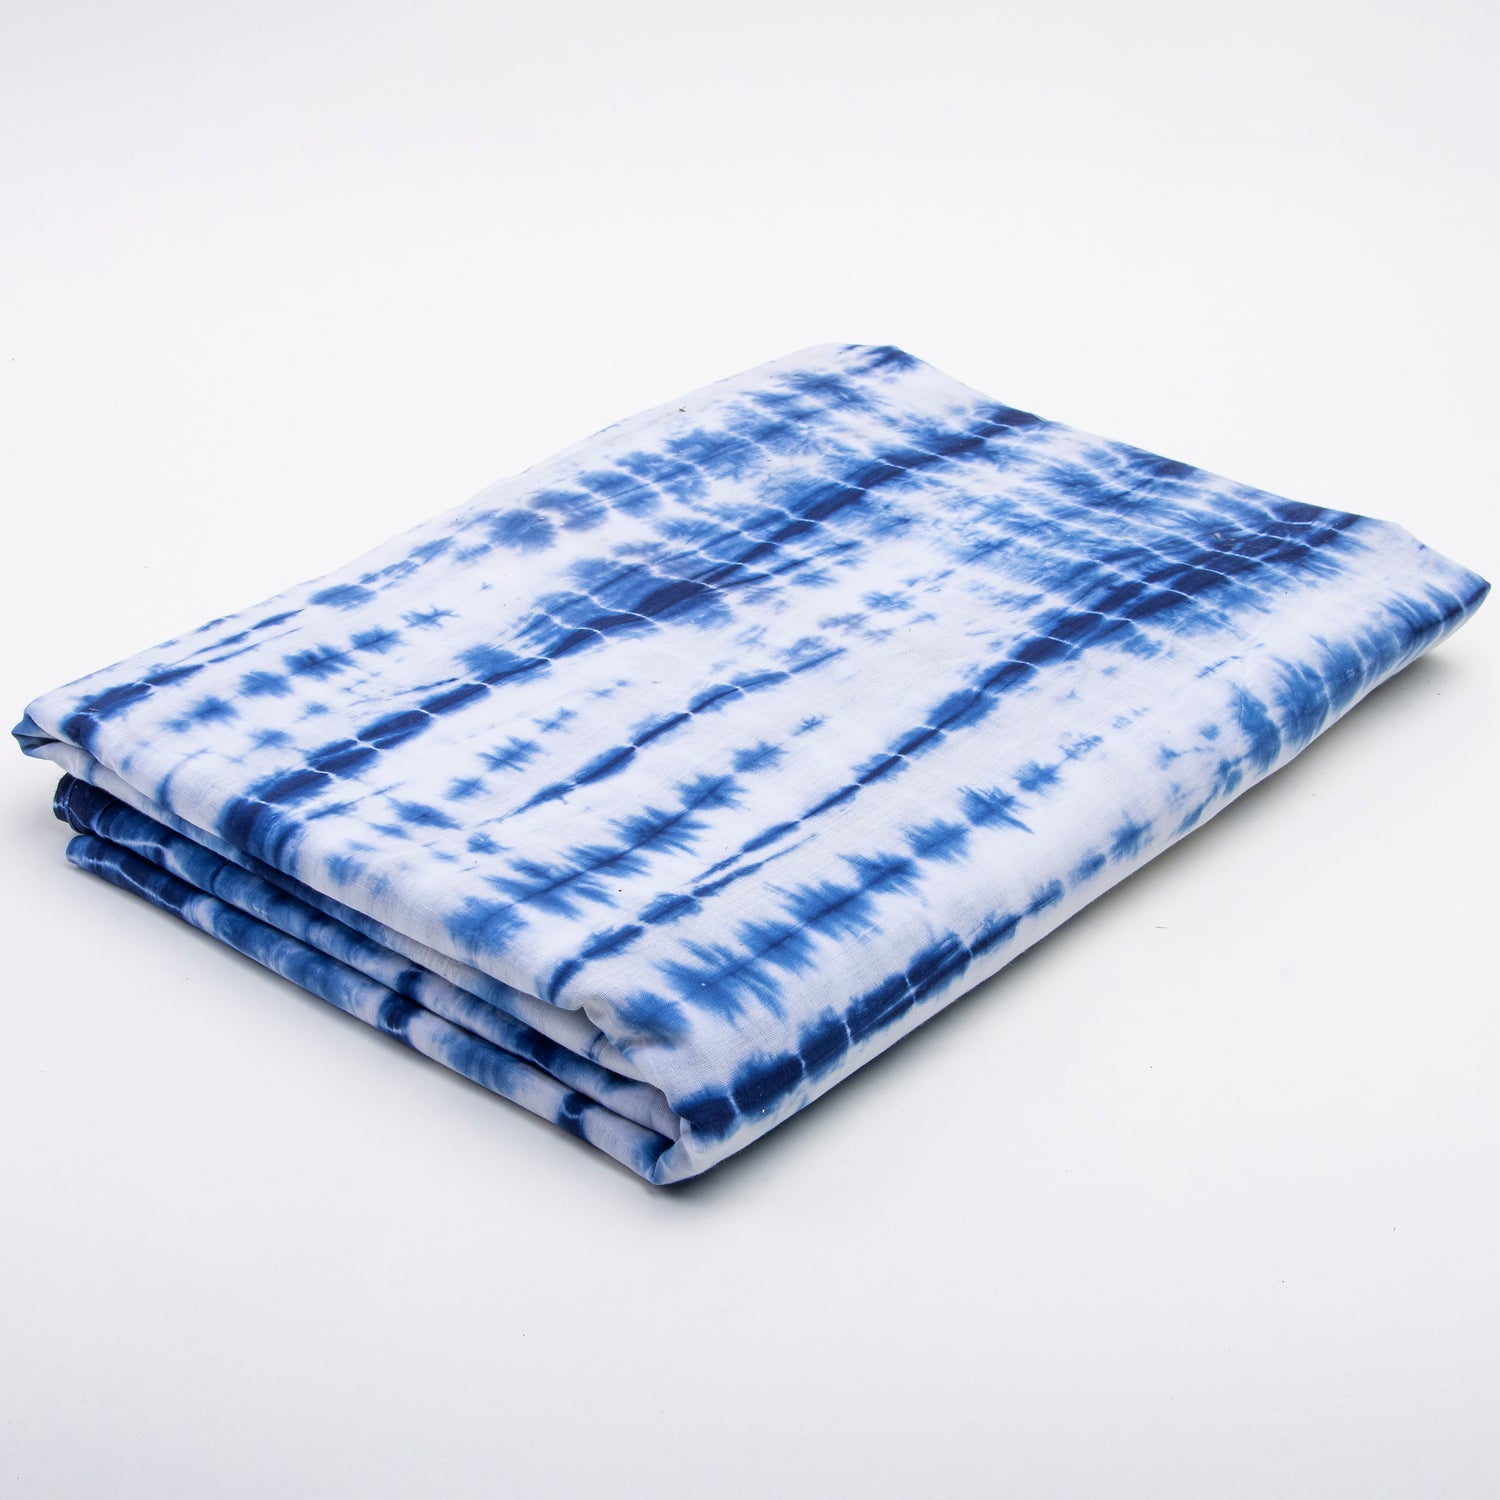 Shibori Cloth Deep Blue Cotton Tie Dye Fabric